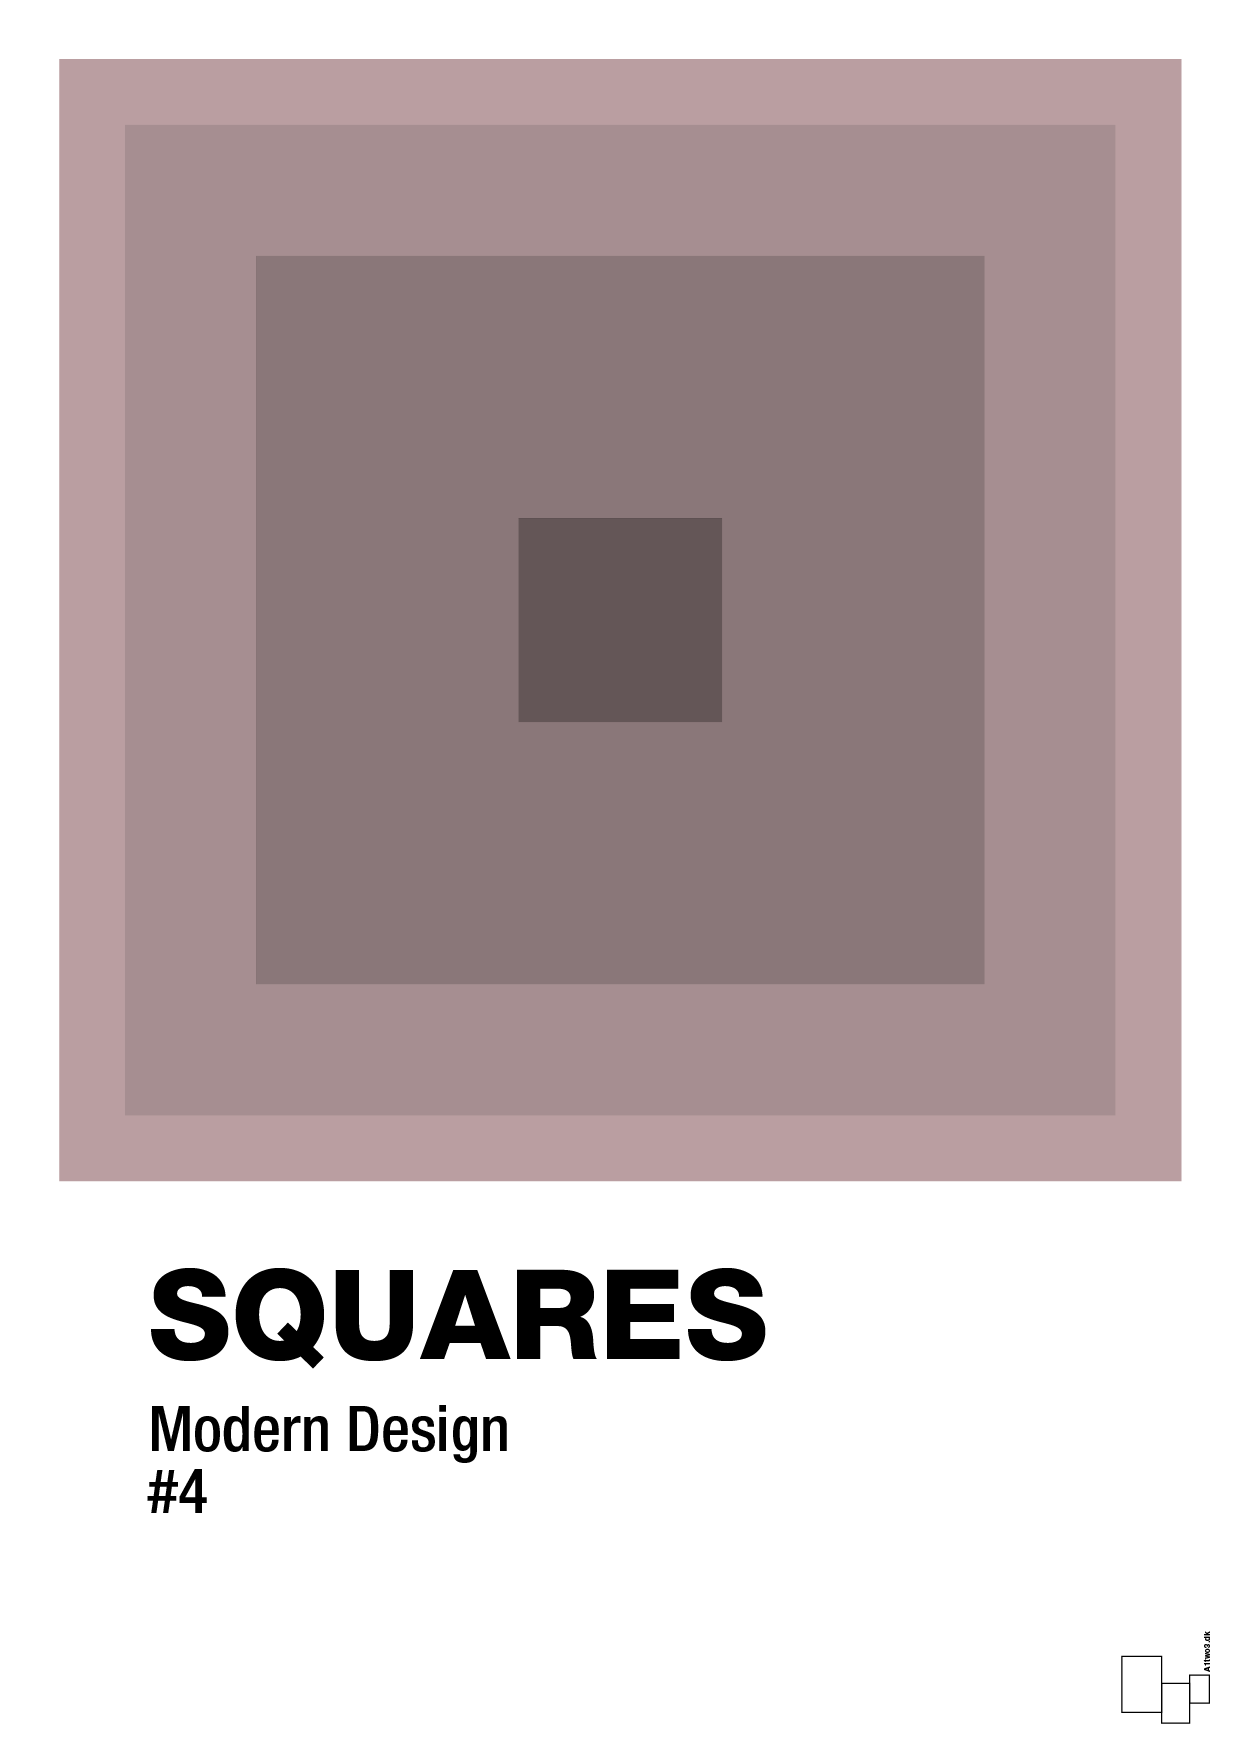 squares #4 - Plakat med Grafik i Light Rose